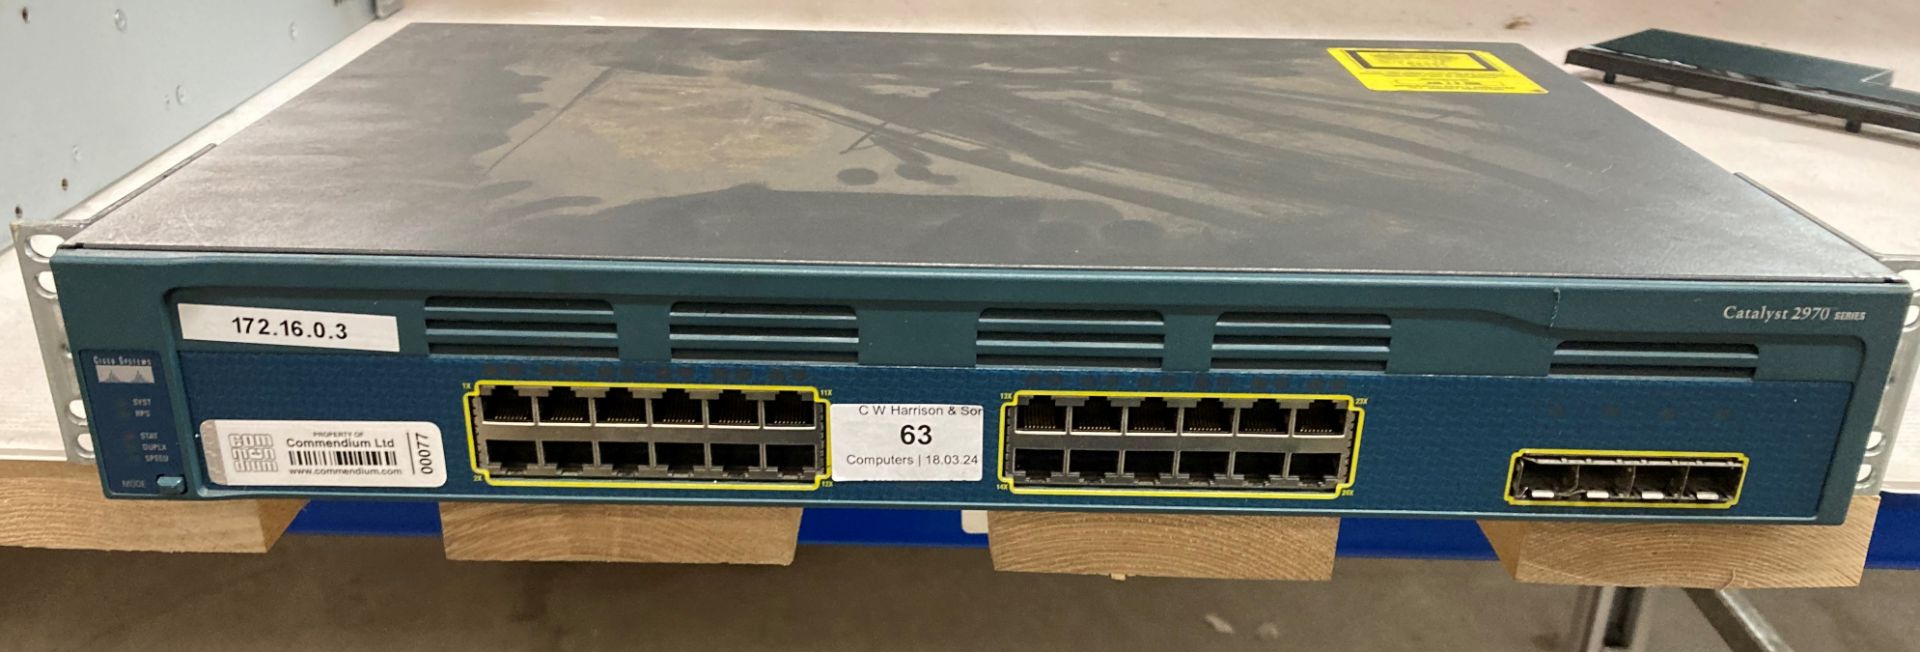 Cisco Catalyst 2970 series rack roundtable 24-port switch (no power lead) (J10)